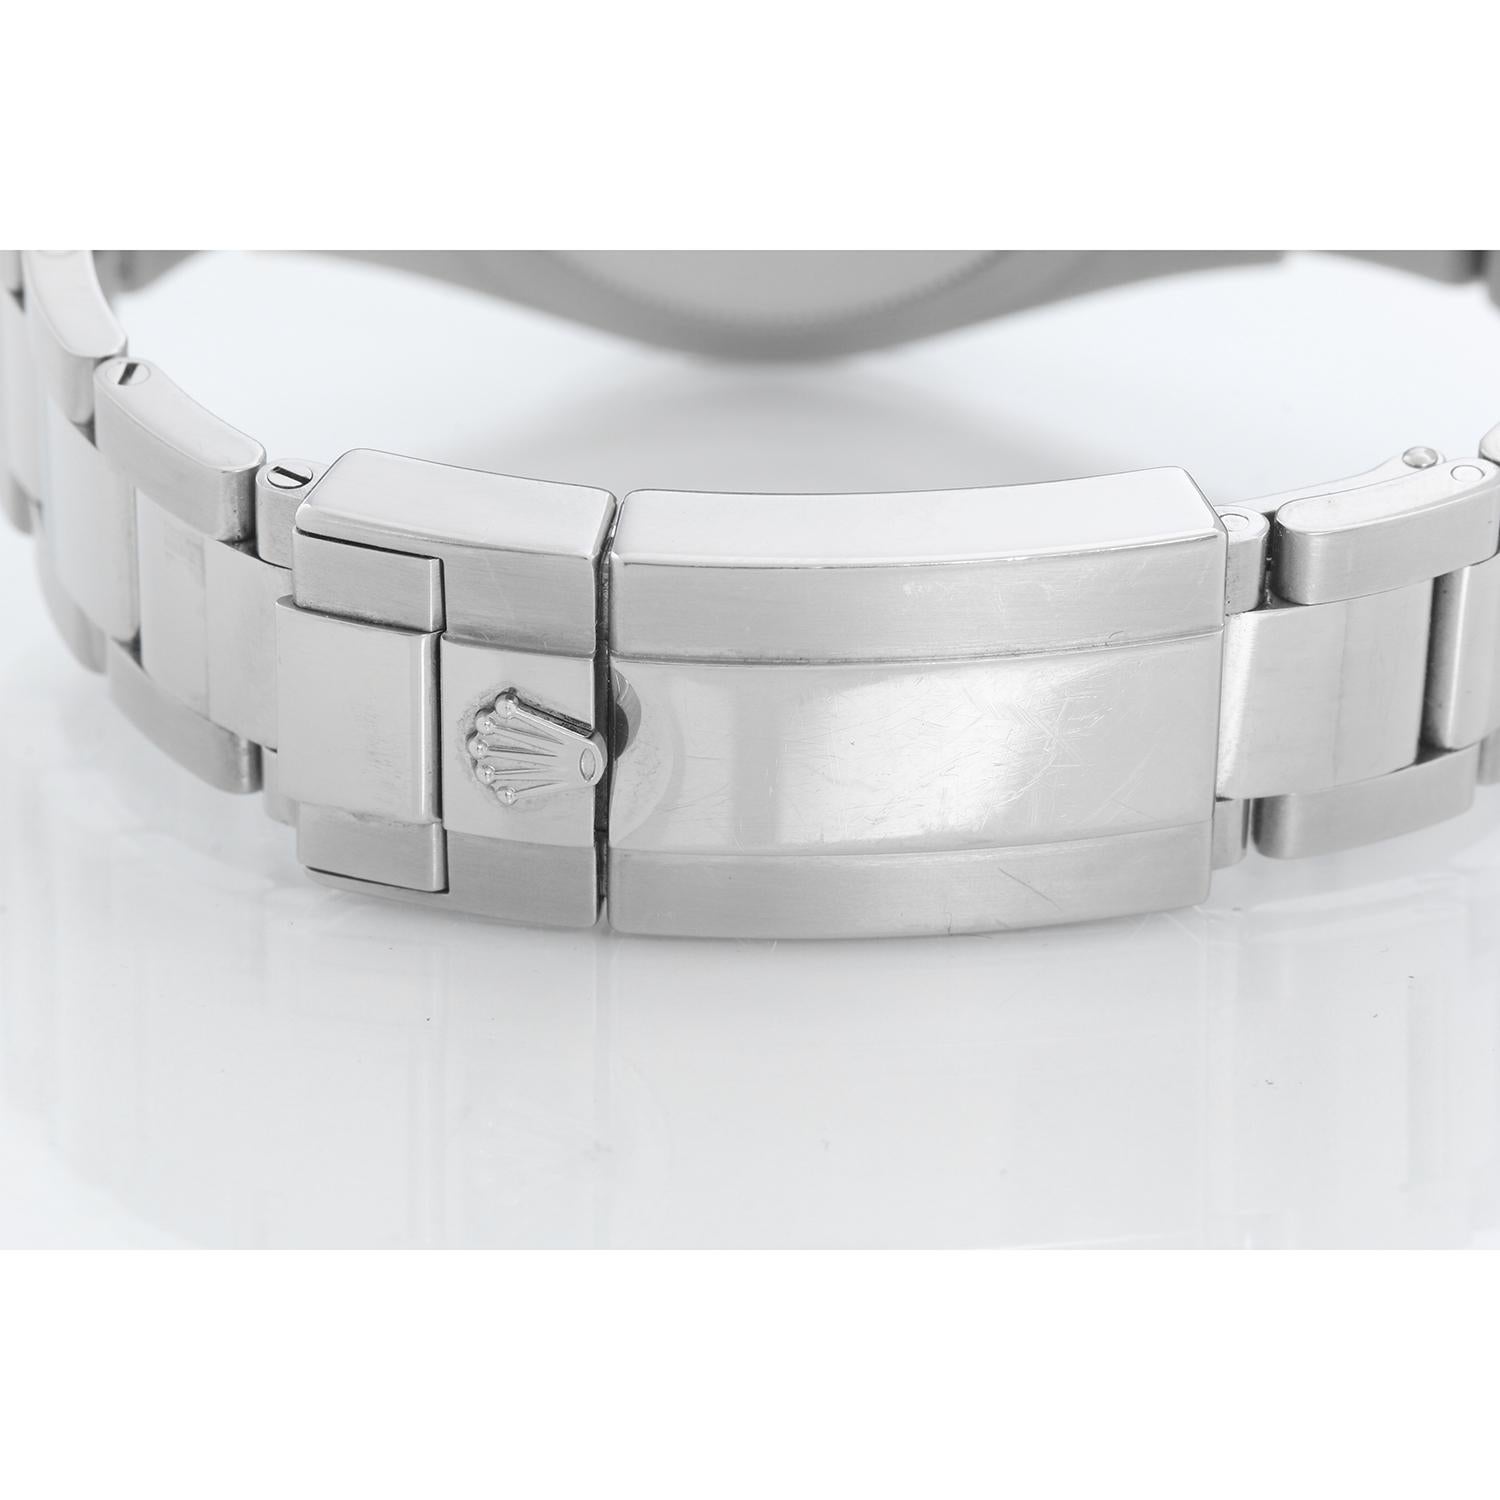 Rolex Daytona Chronograph Men's Stainless Steel Watch 116520 2